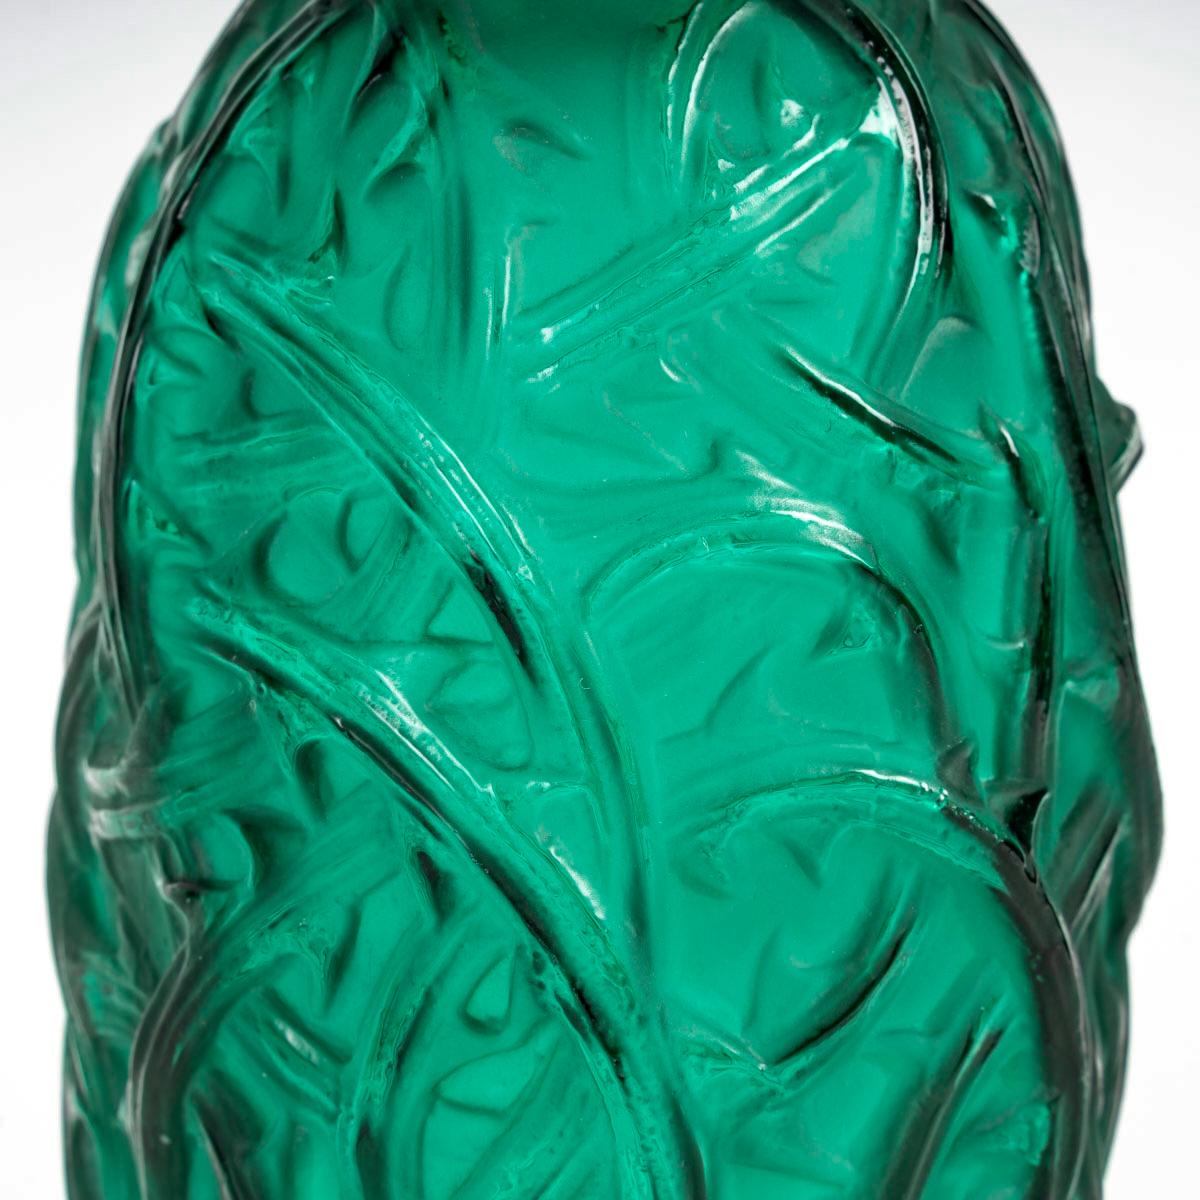 lalique green vase